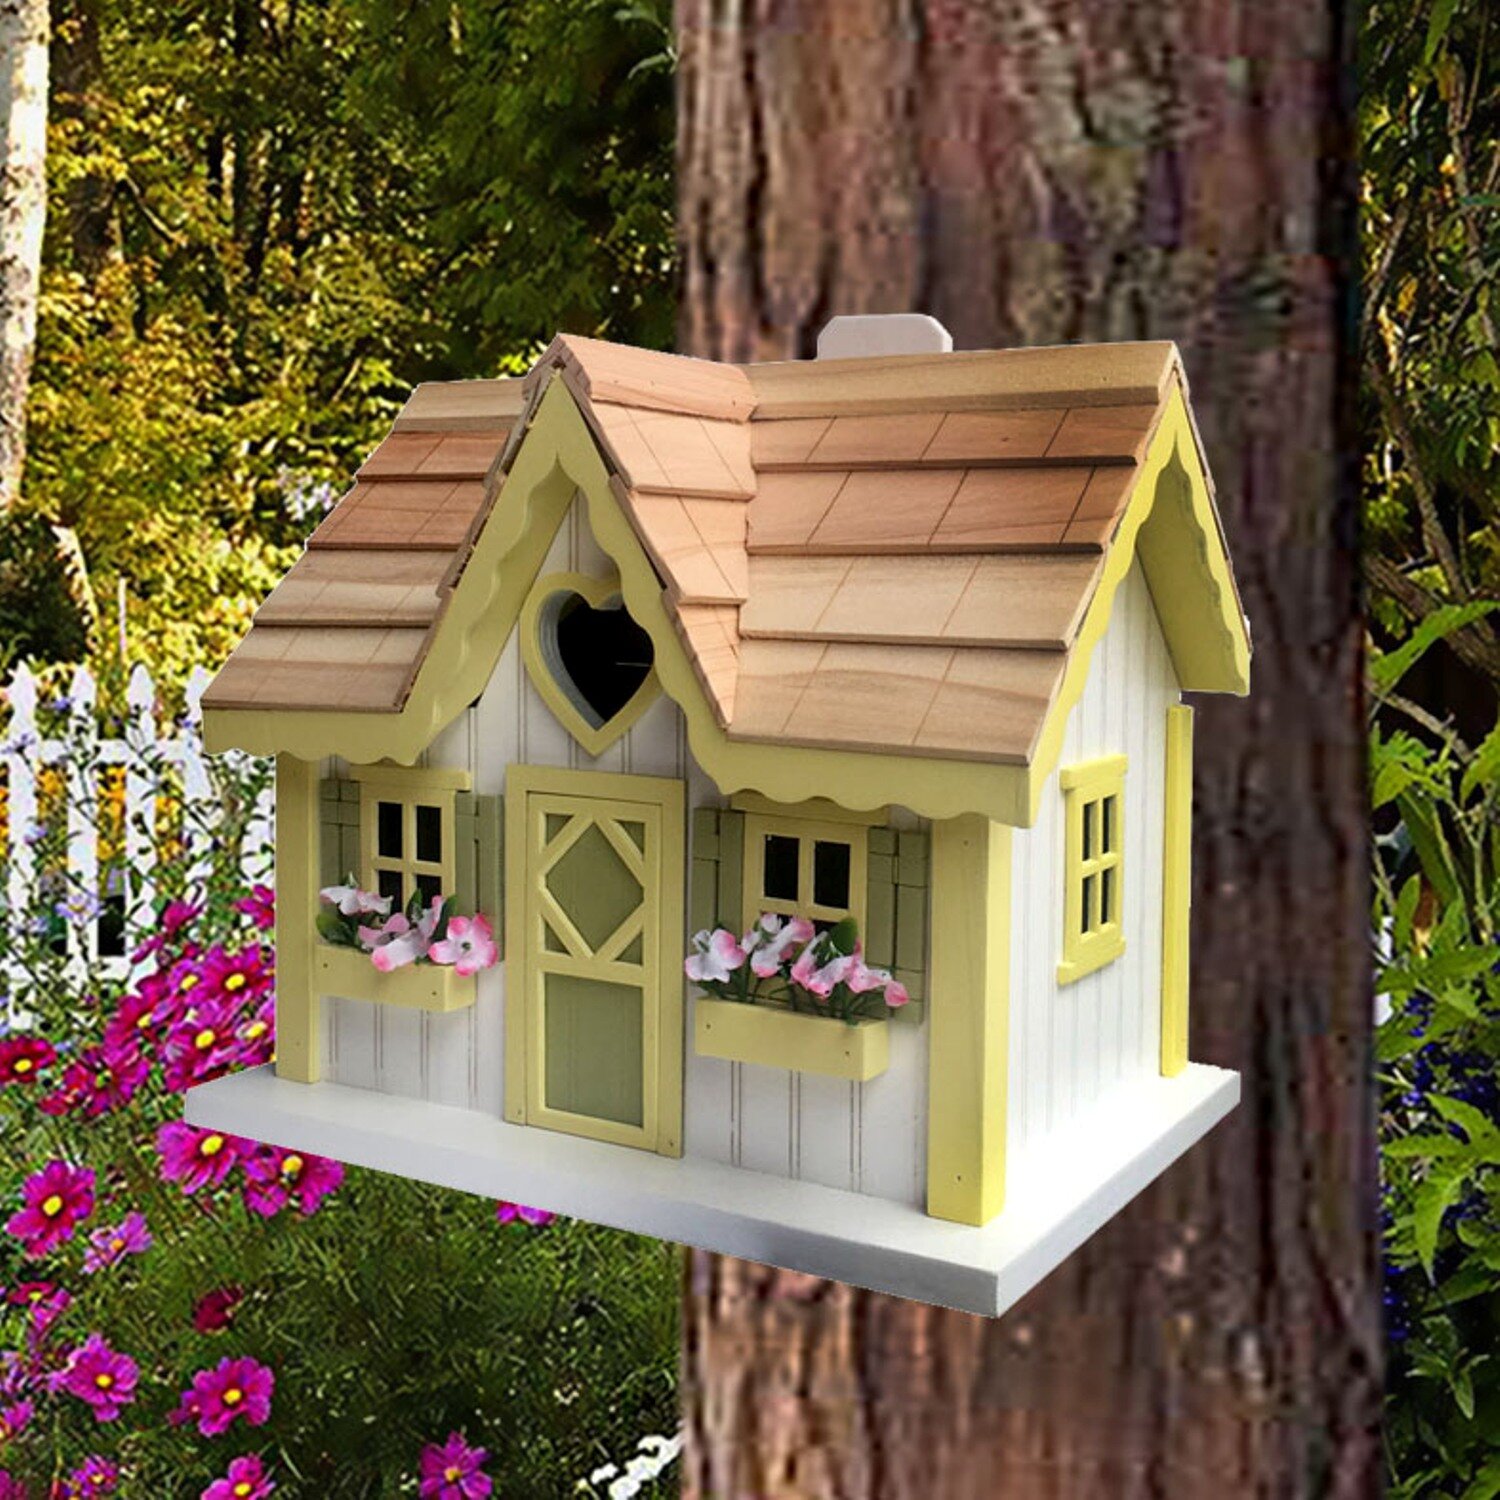 Plow & Hearth Hanging Wooden Stone Cottage Songbird Birdhouse 7 sq x 9.5 H 